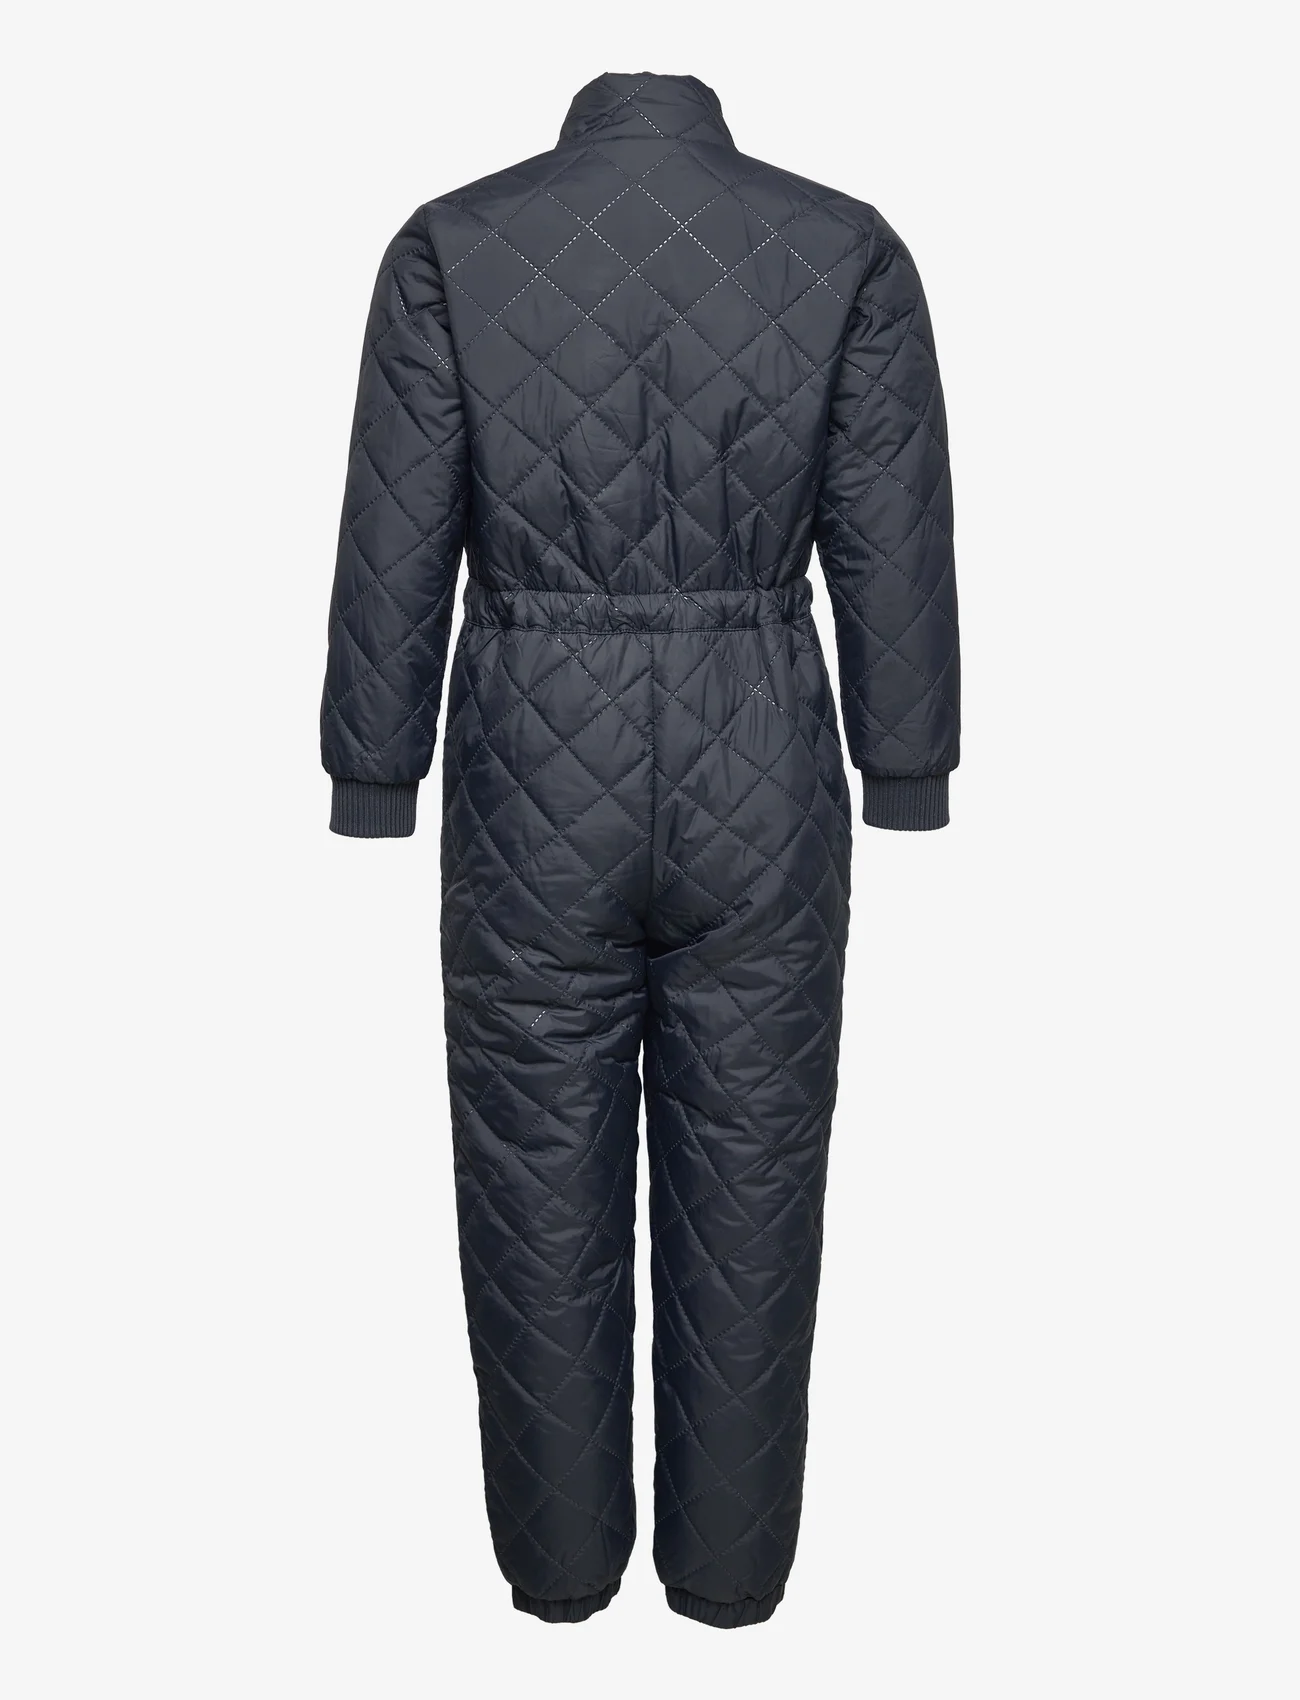 ZigZag - Heartlake Quilted Jumpsuit - kombinezony termiczne - navy blazer - 1